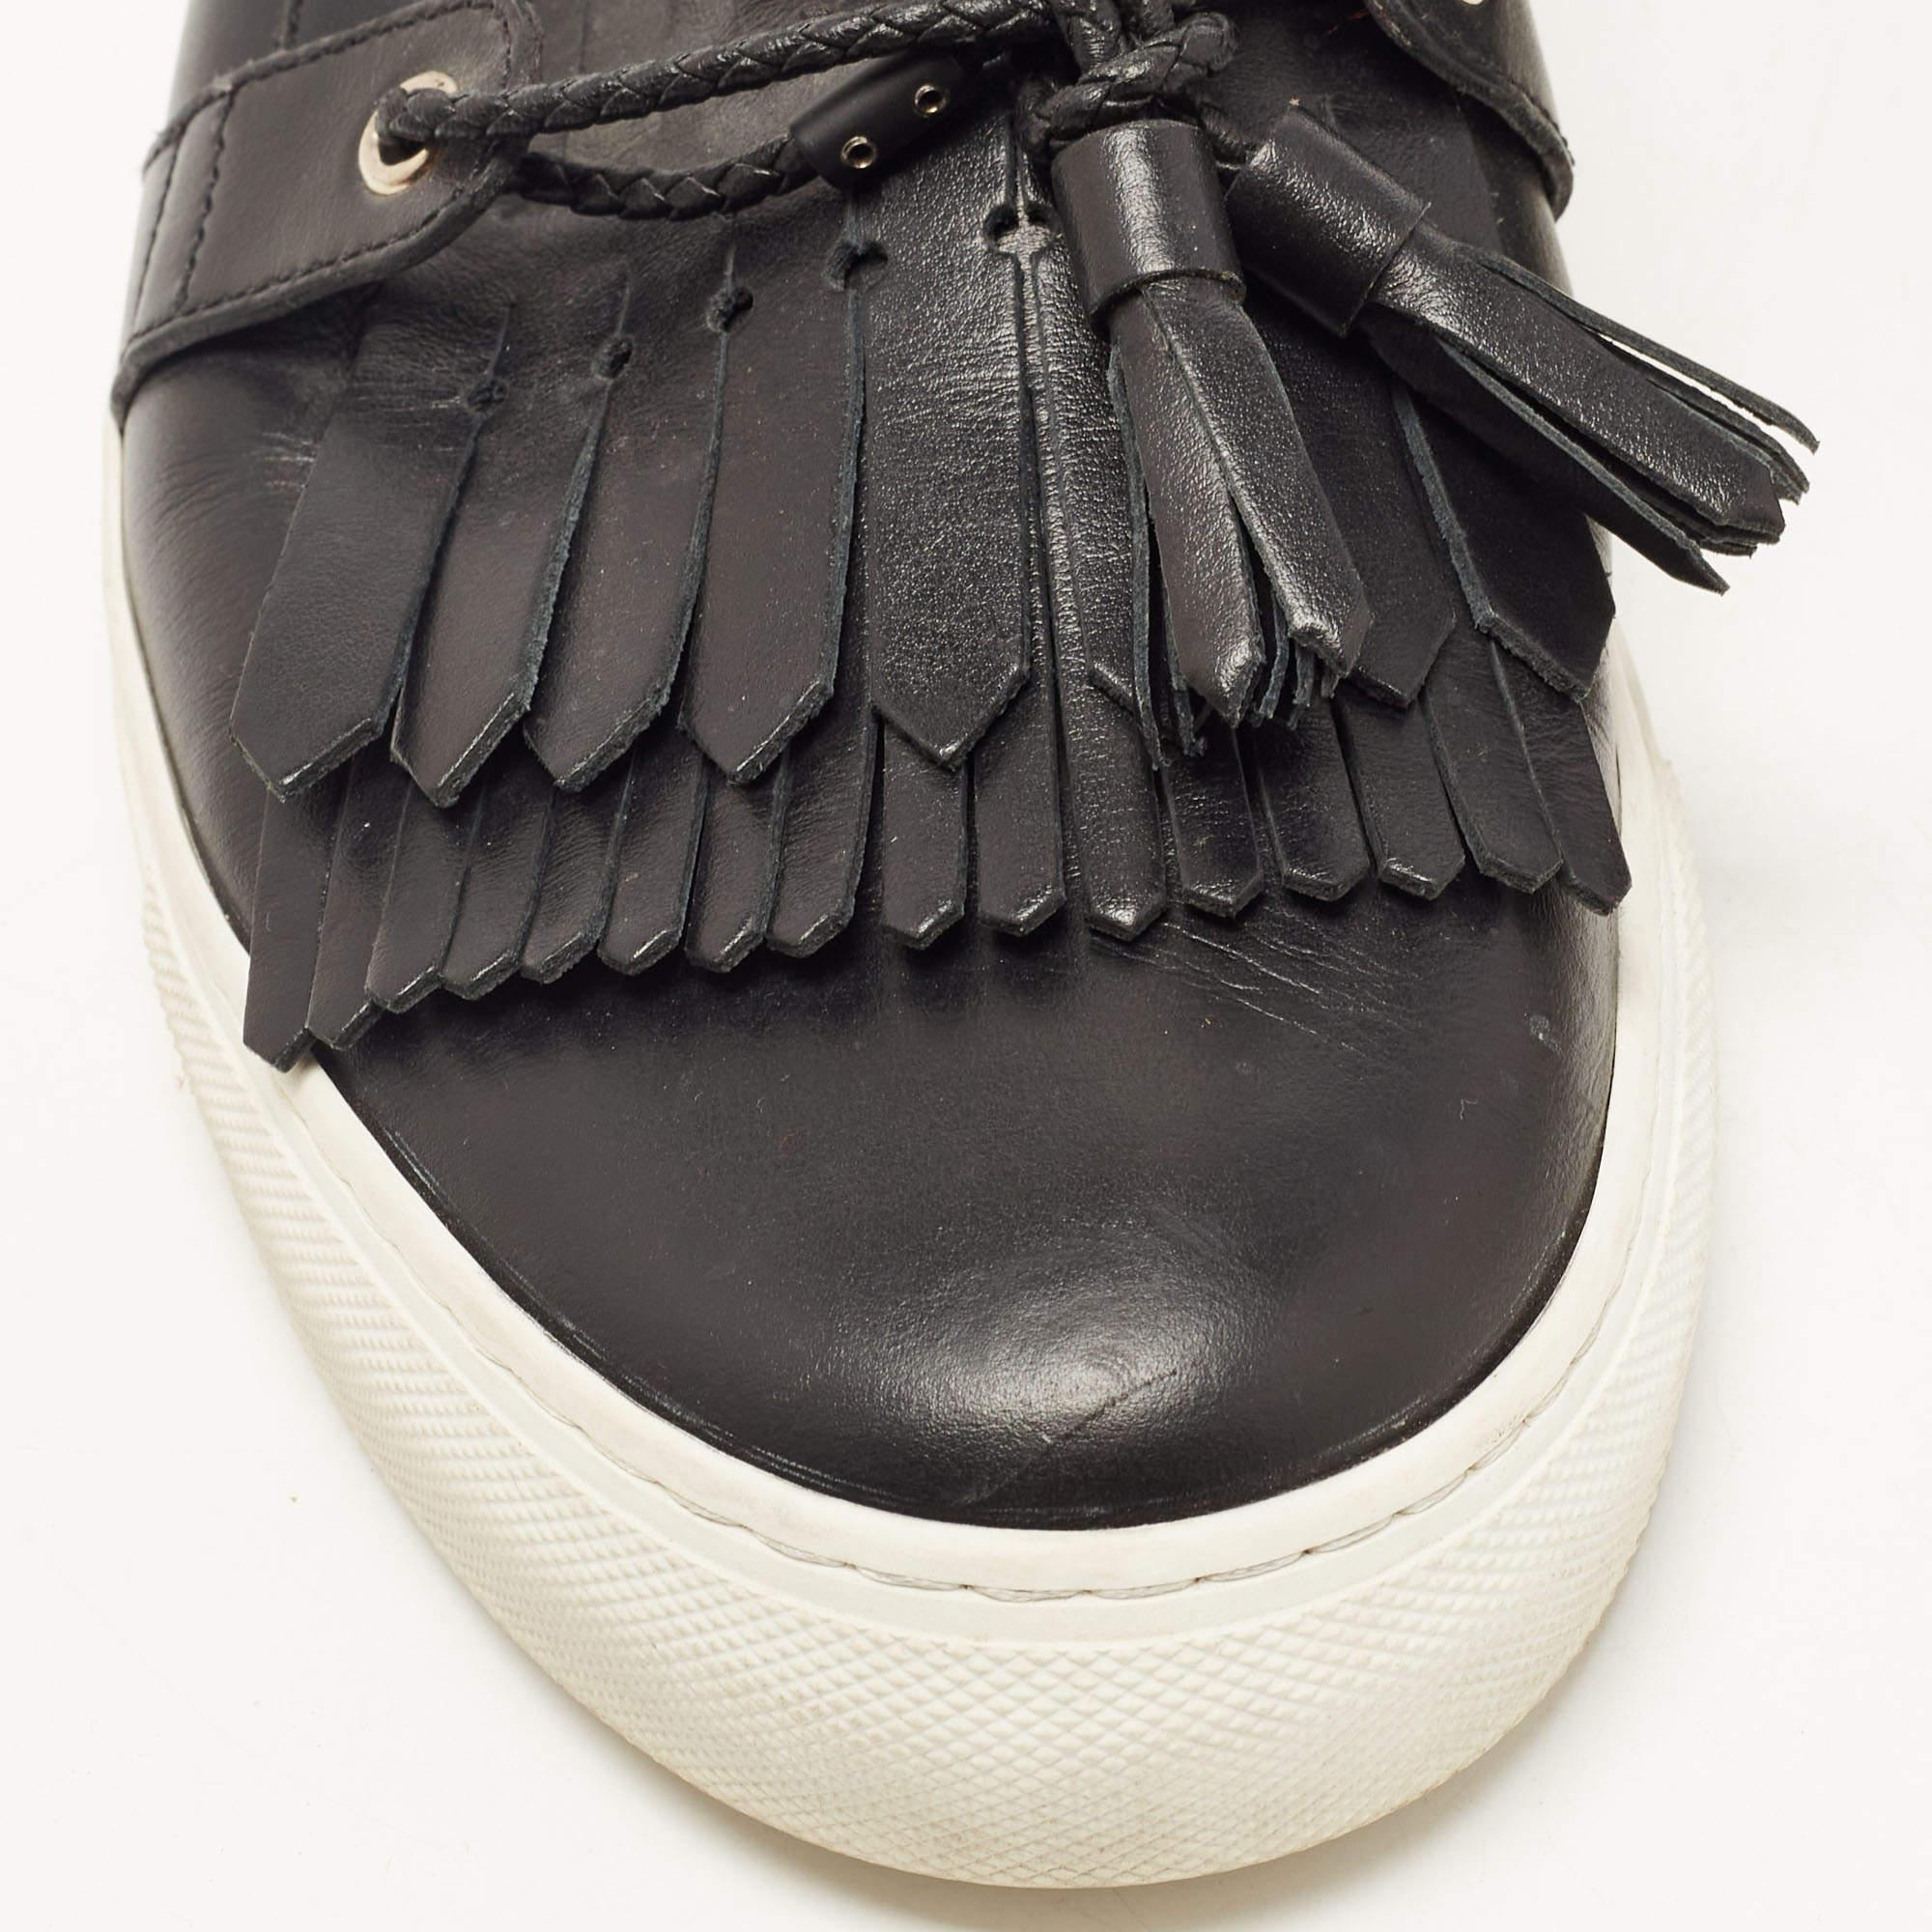 Dolce & Gabbana Black Leather Fringe Slip On Sneakers Size 41.5 For Sale 4